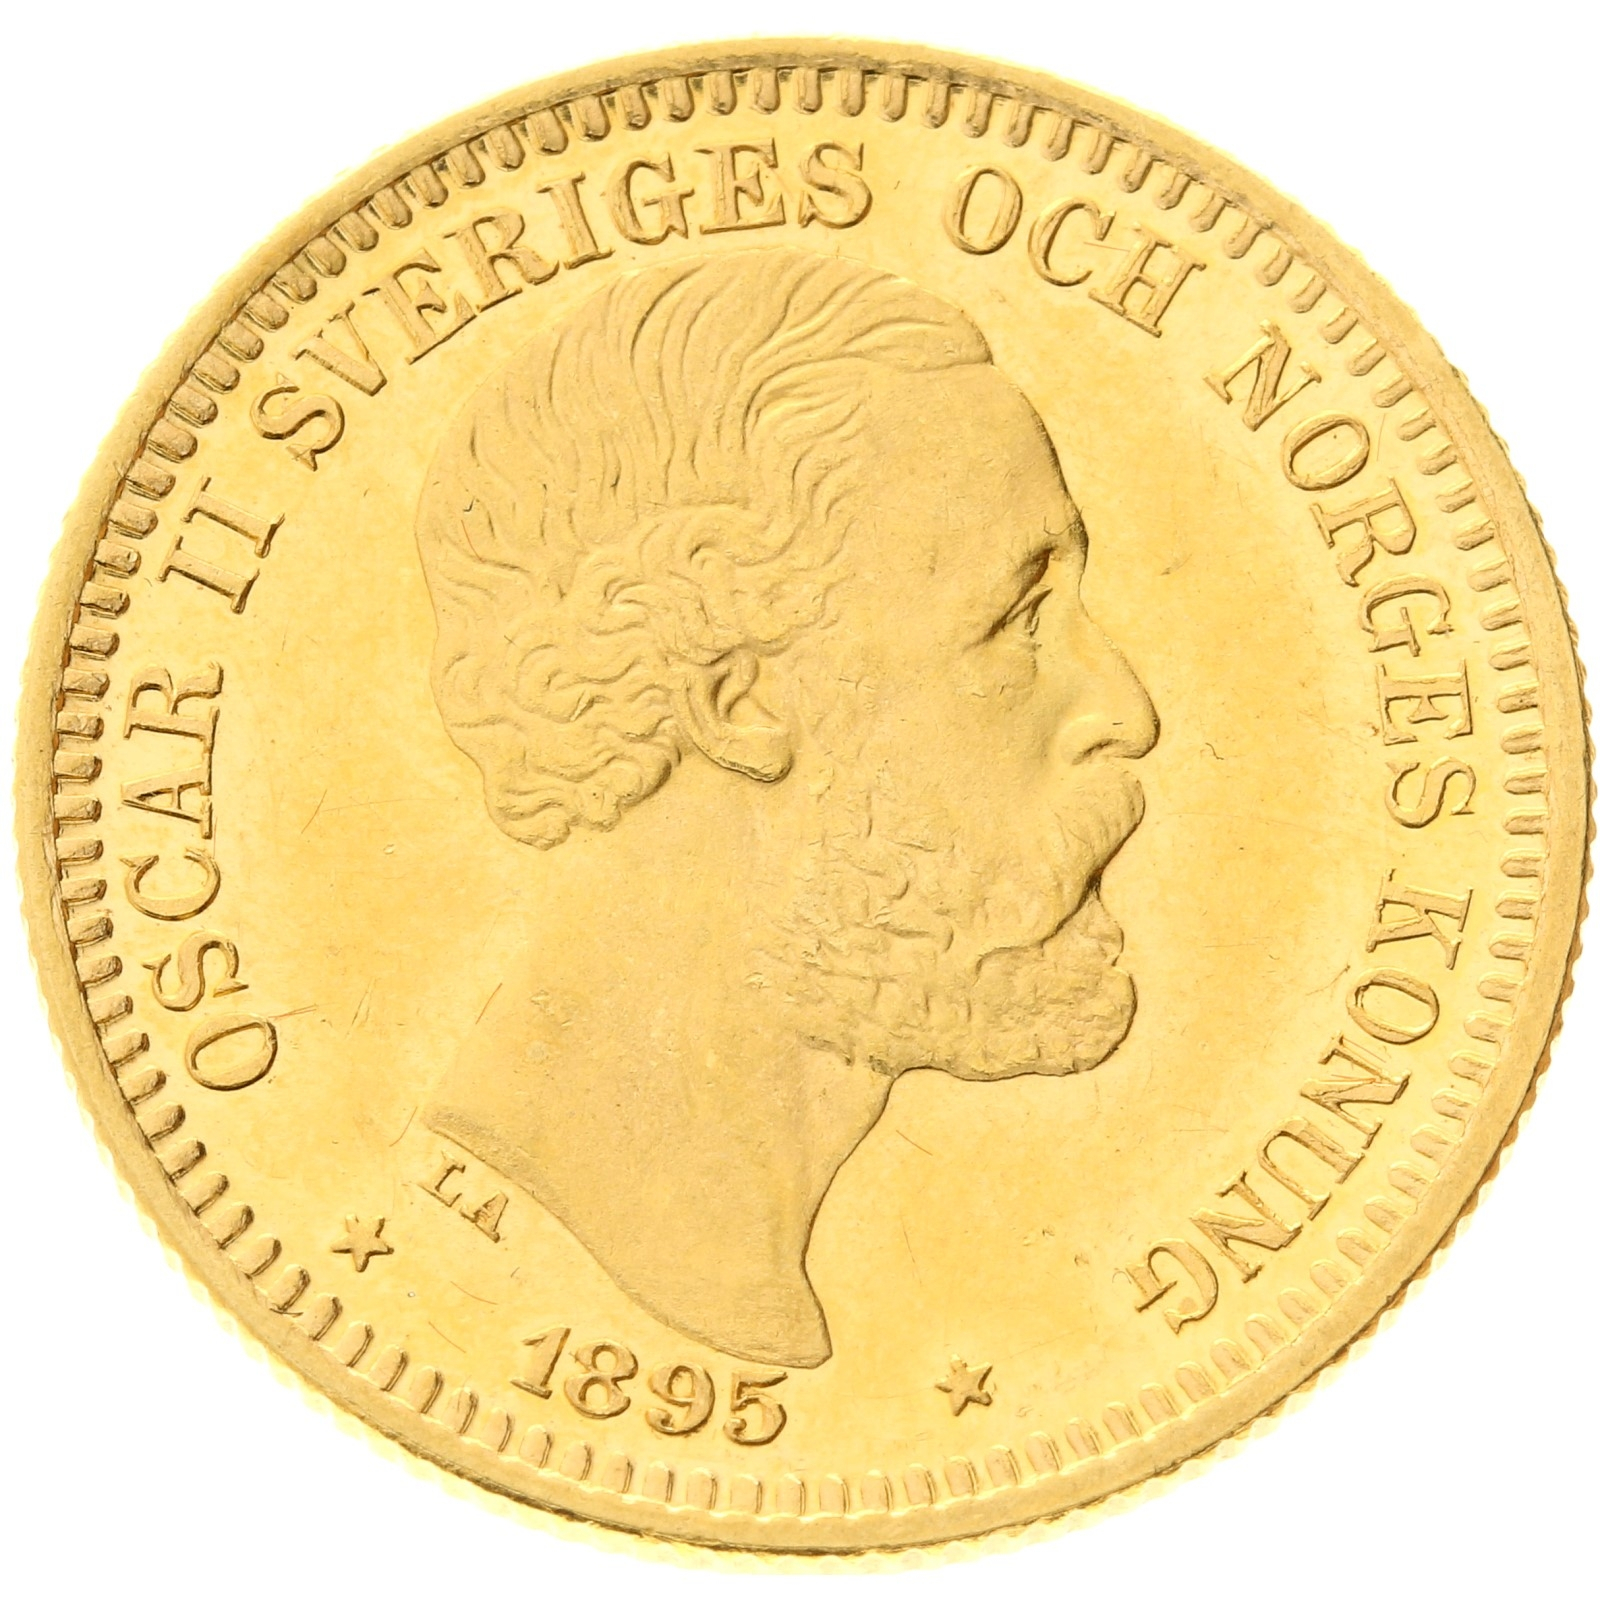 Sweden - 20 kronor - 1895 - Oscar II 